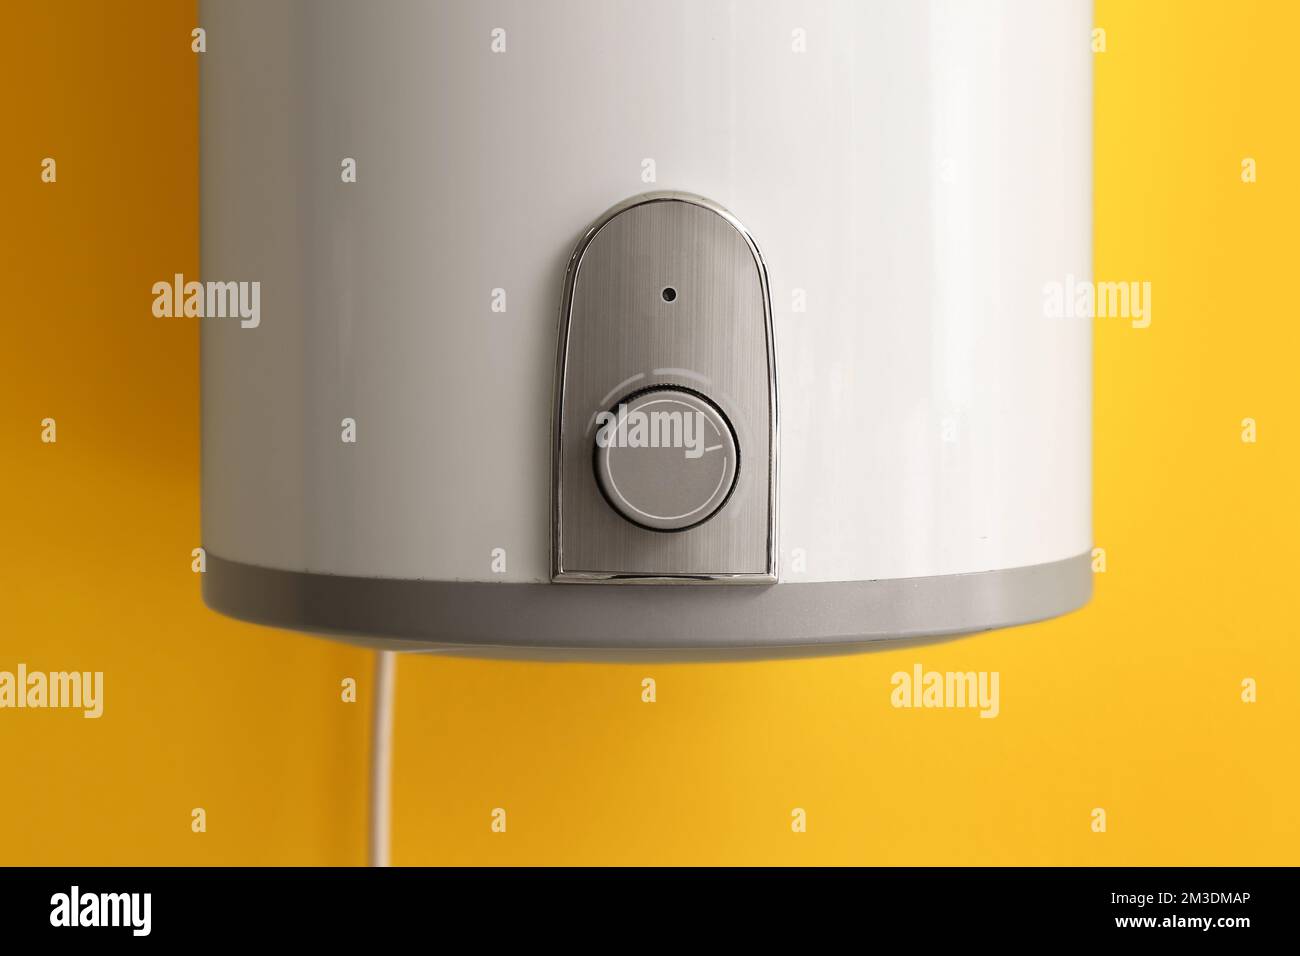 Caldaia elettrica moderna su parete gialla, closeup Foto stock - Alamy